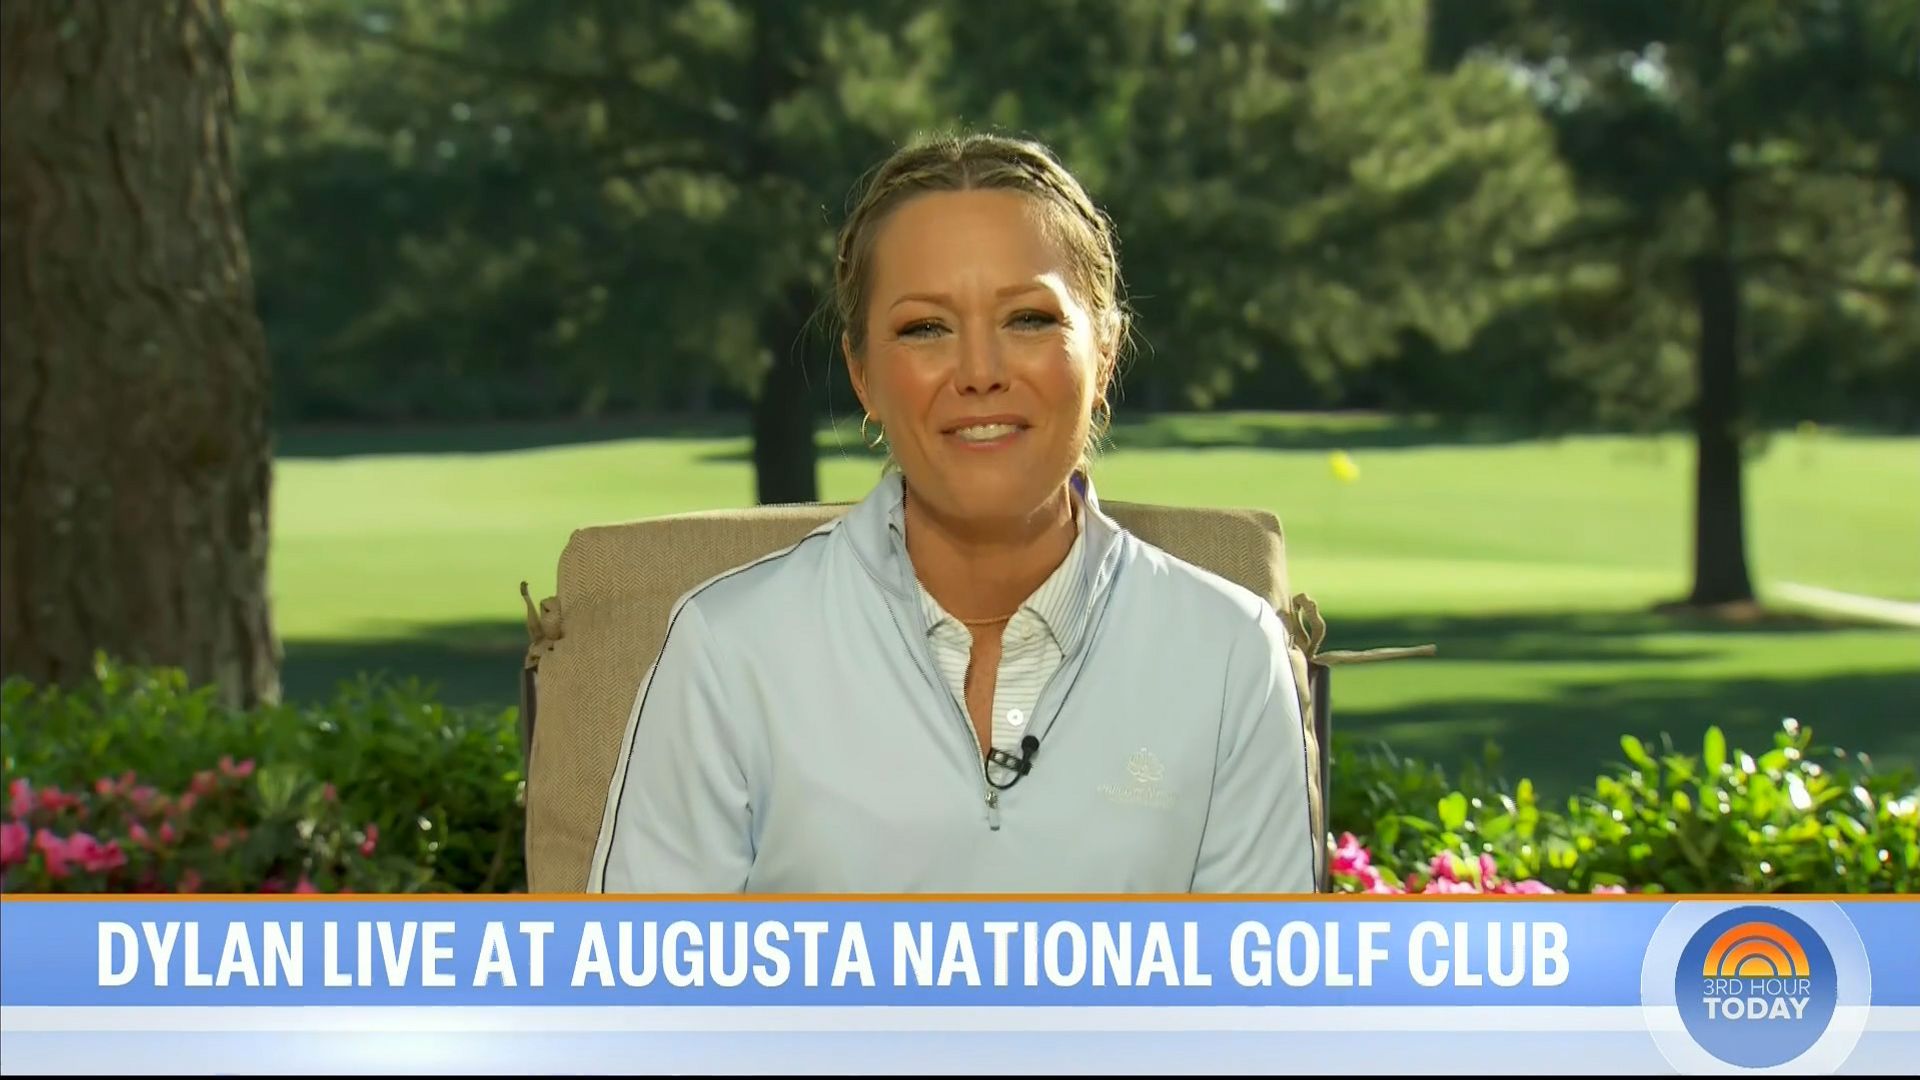 Dylan Dreyer live at Augusta National Golf Club